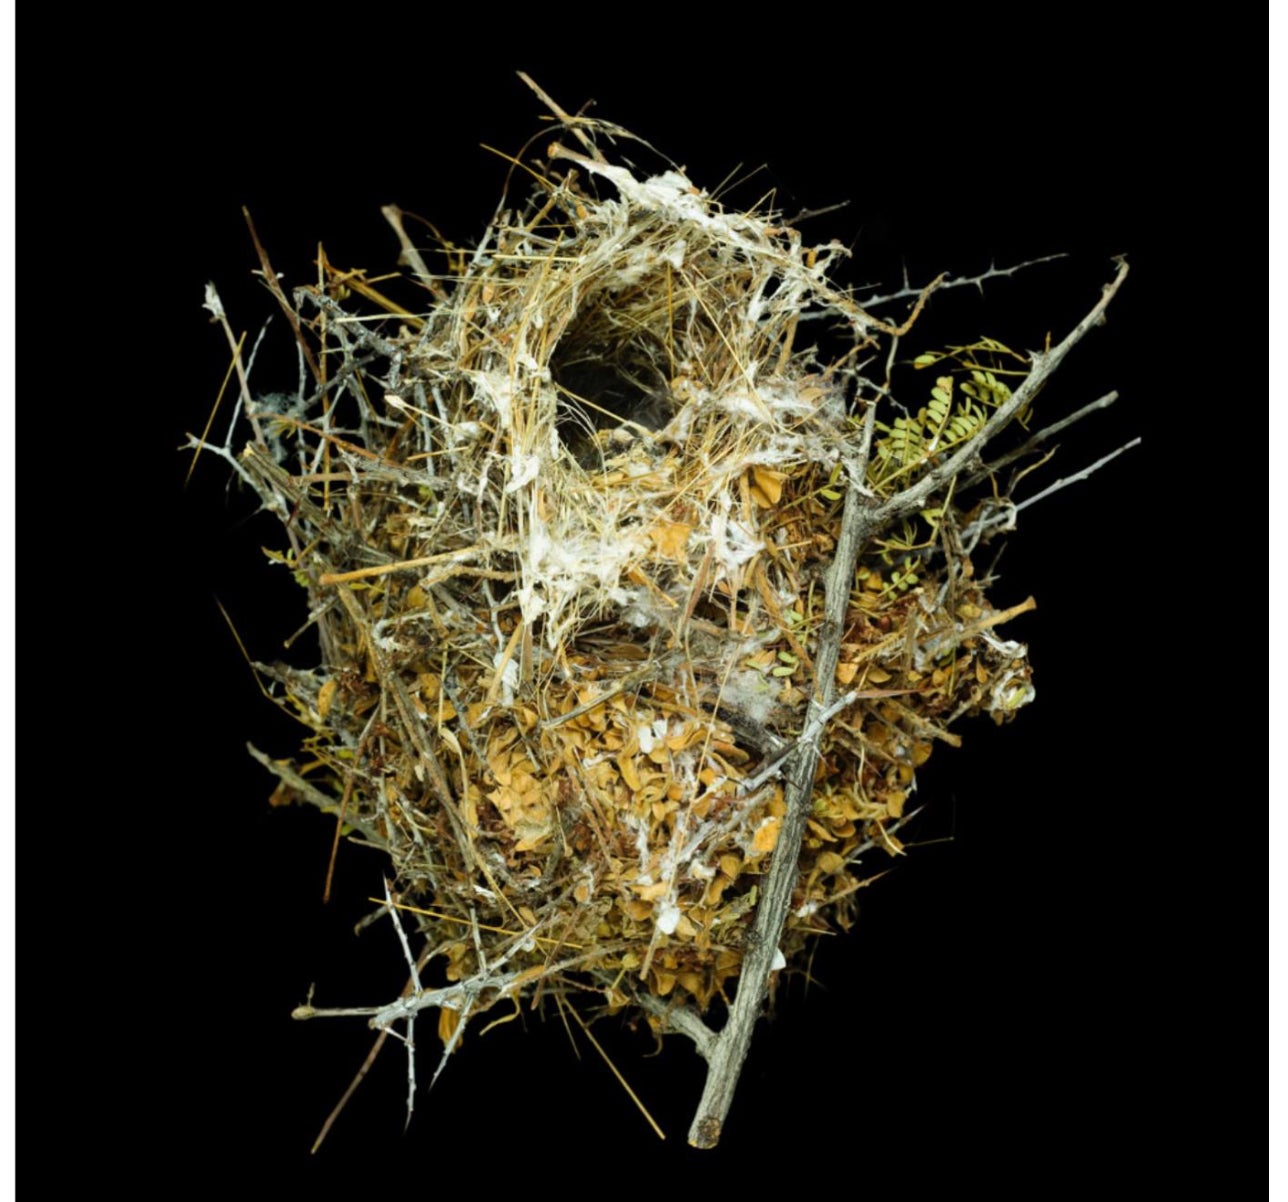 Sharon Beals Lithograph of a Nest - Verdin Auriparus Flaviceps